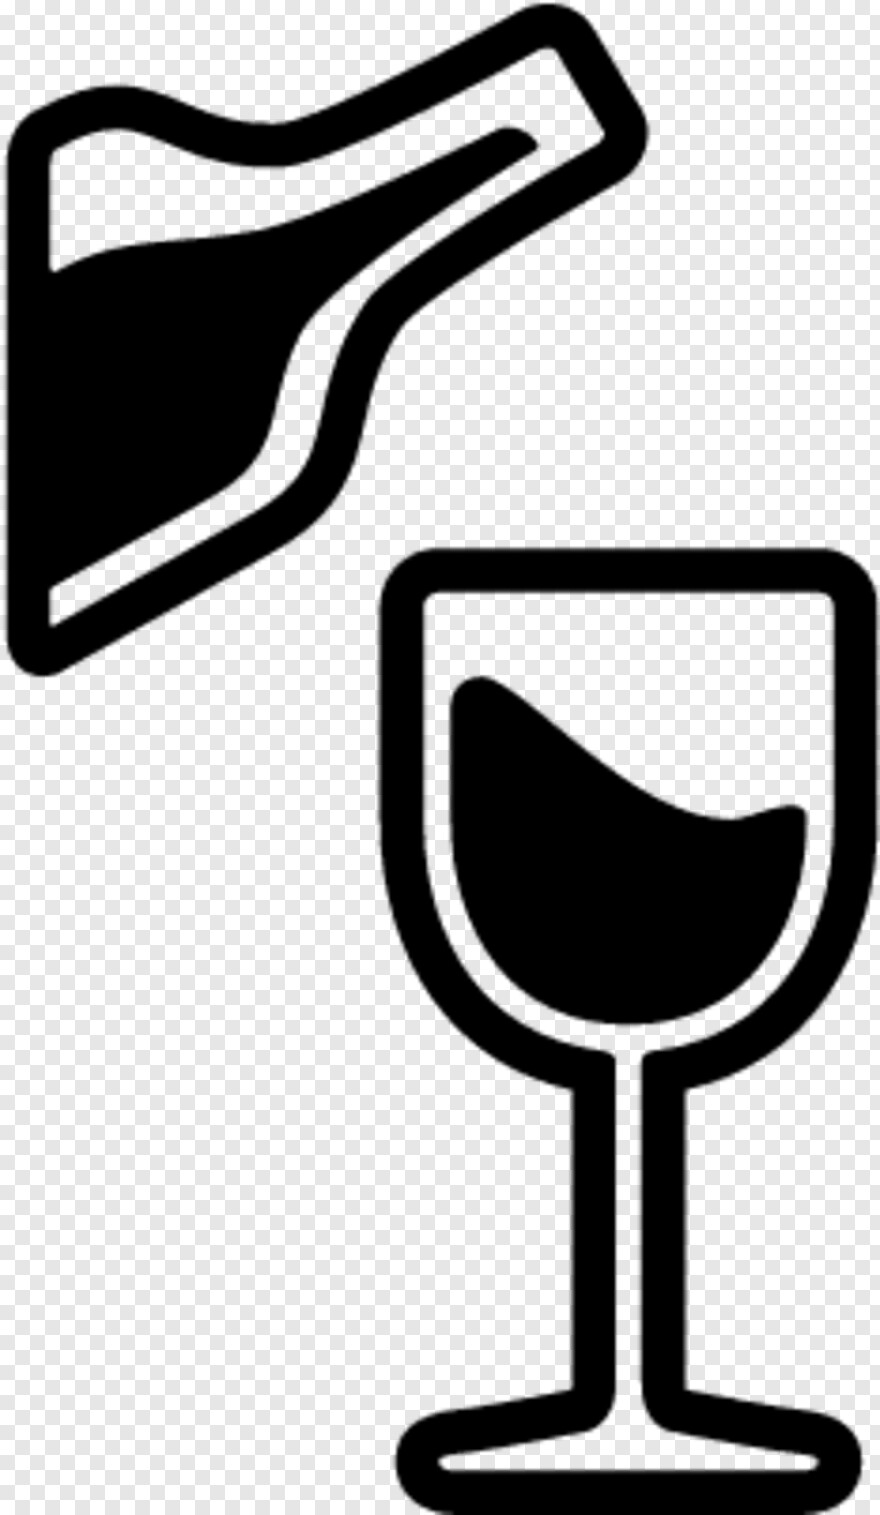 wine-glass-icon # 325472